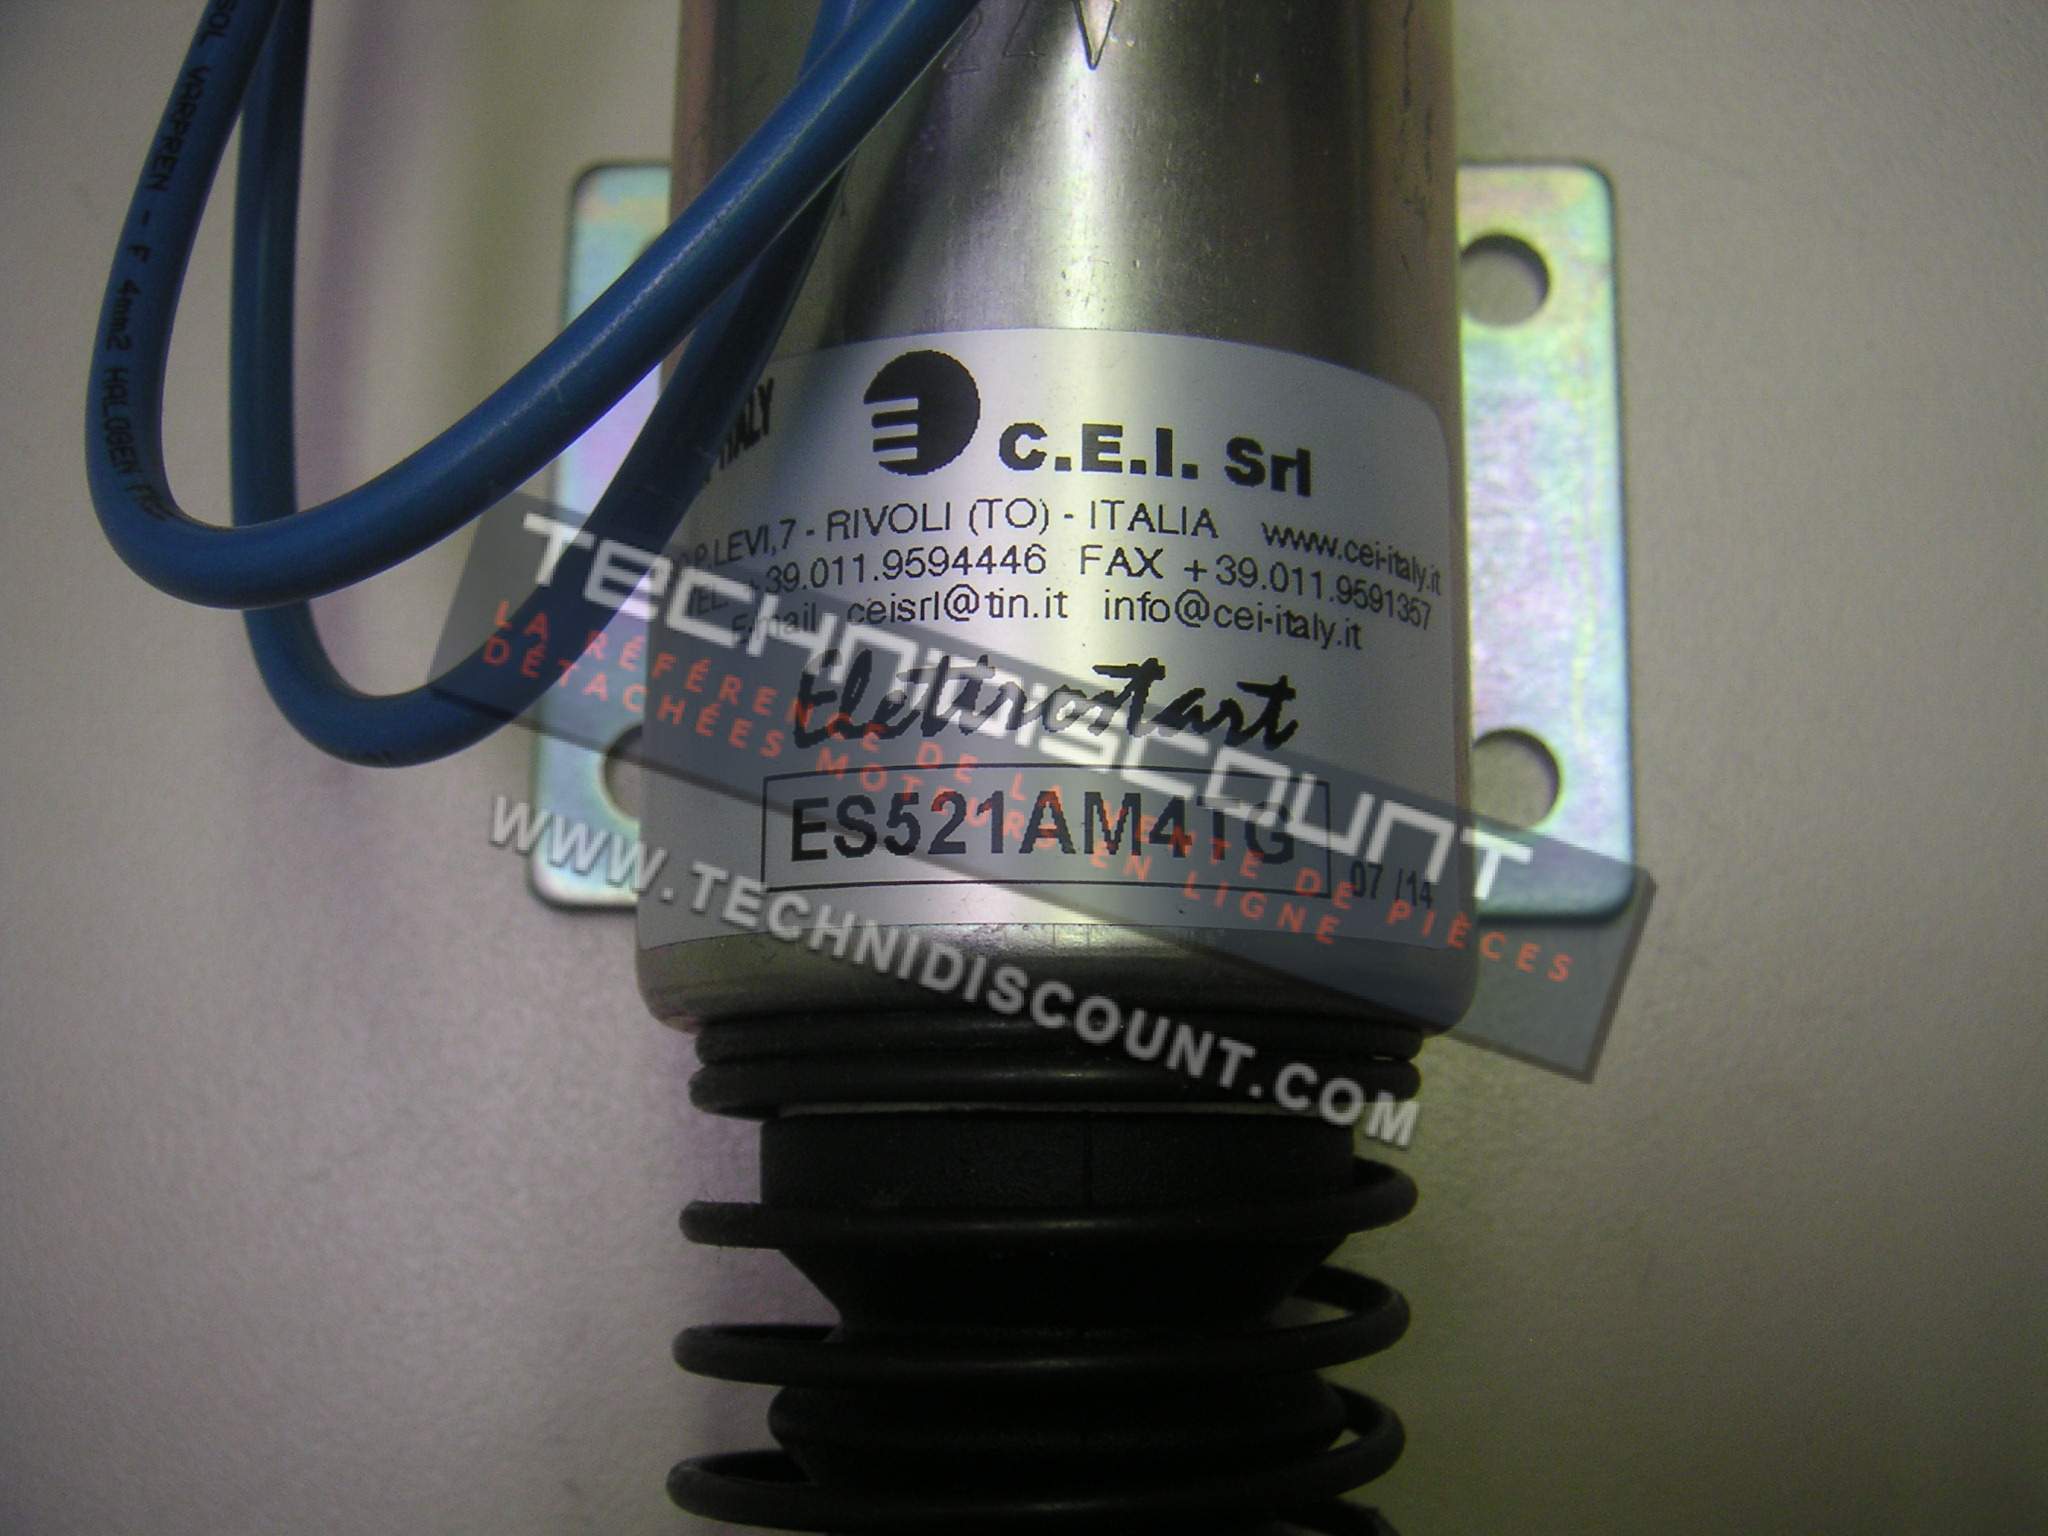 Electrostart 24V CEI ES521AM4TG (Elettrostart ES521AM4TG)